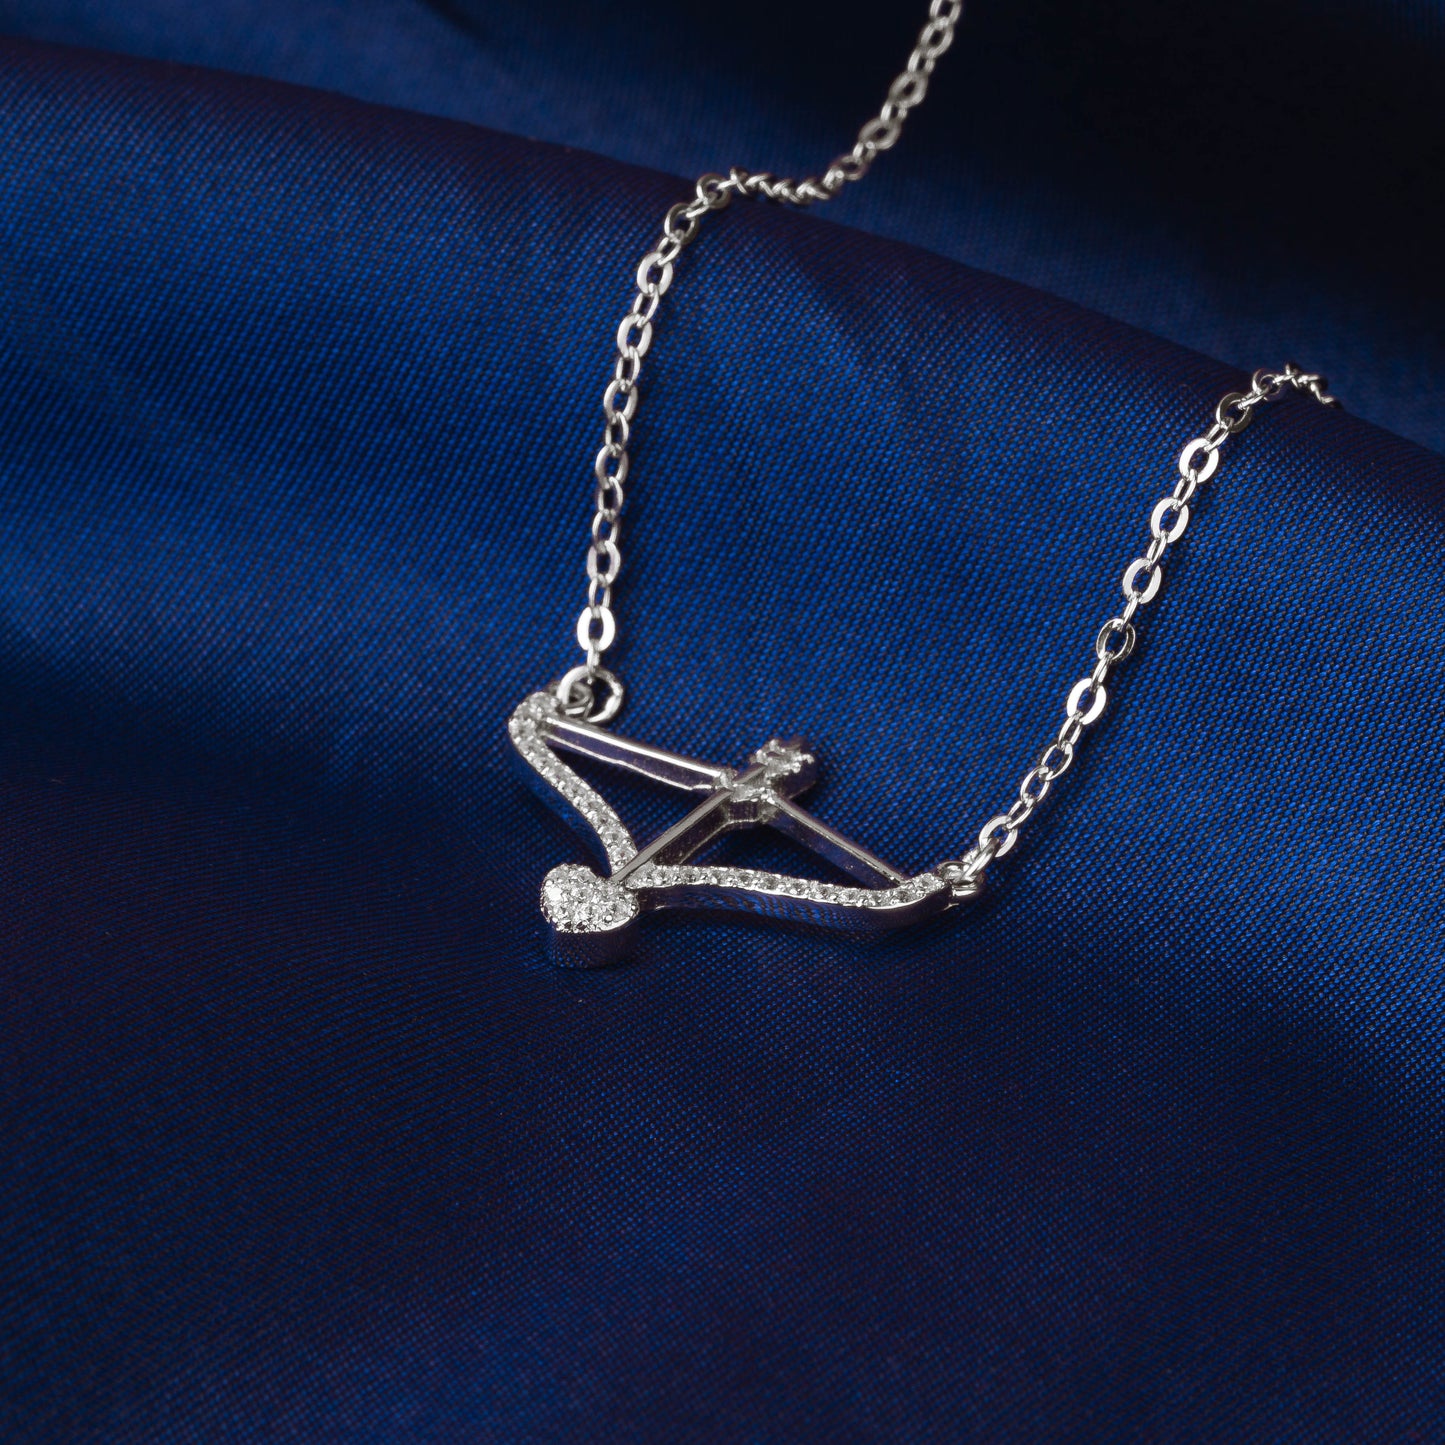 Silver Cupid's Arrow Chain Pendant